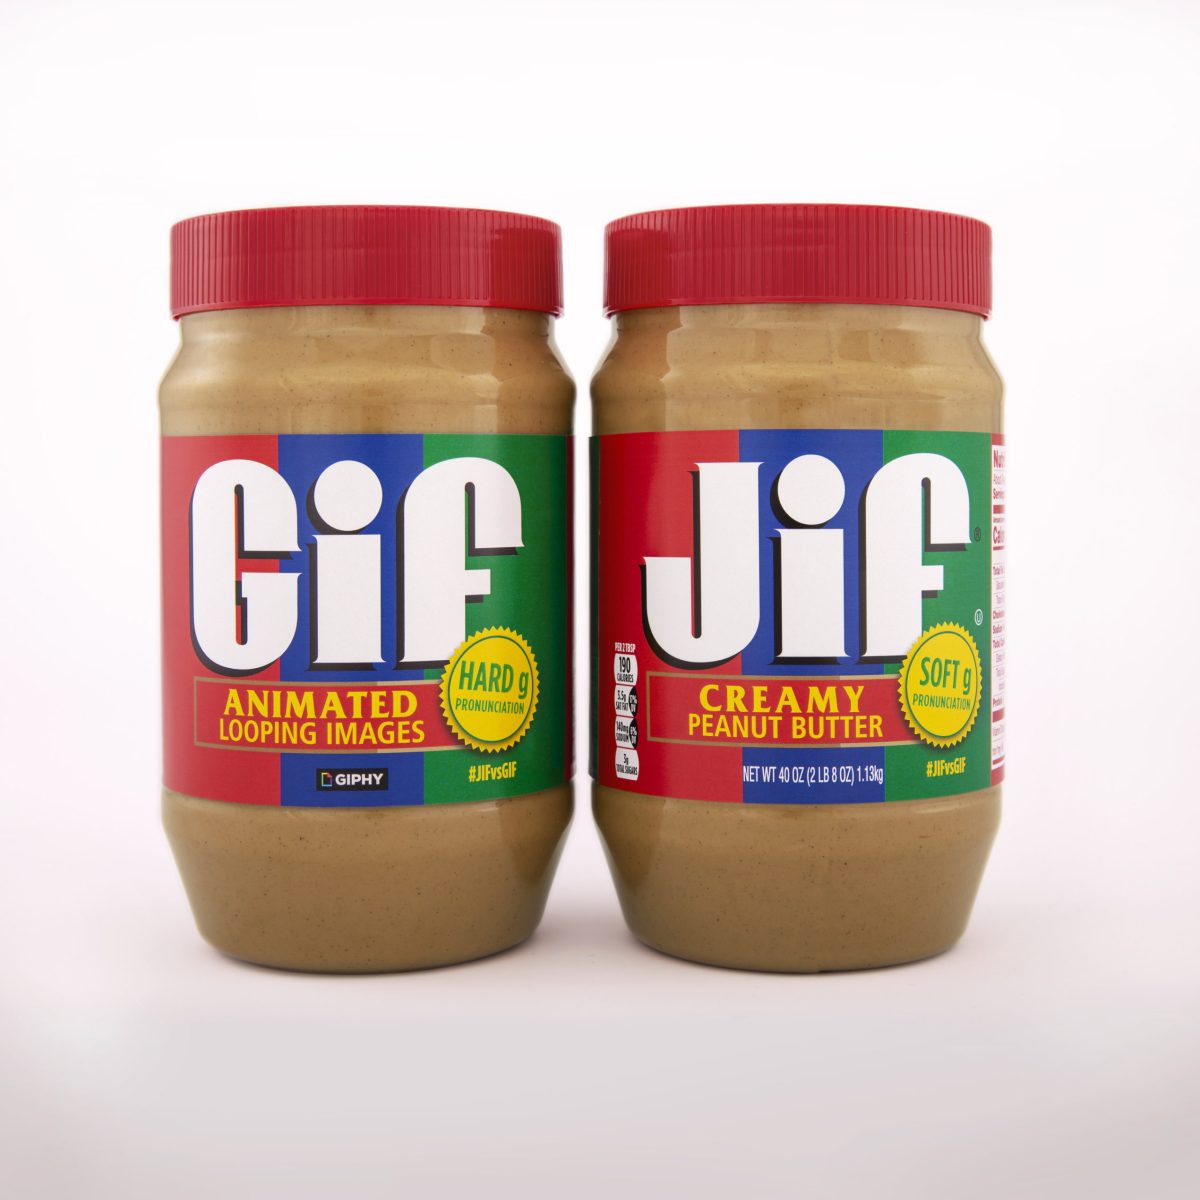 Jif vs Gif peanut butters